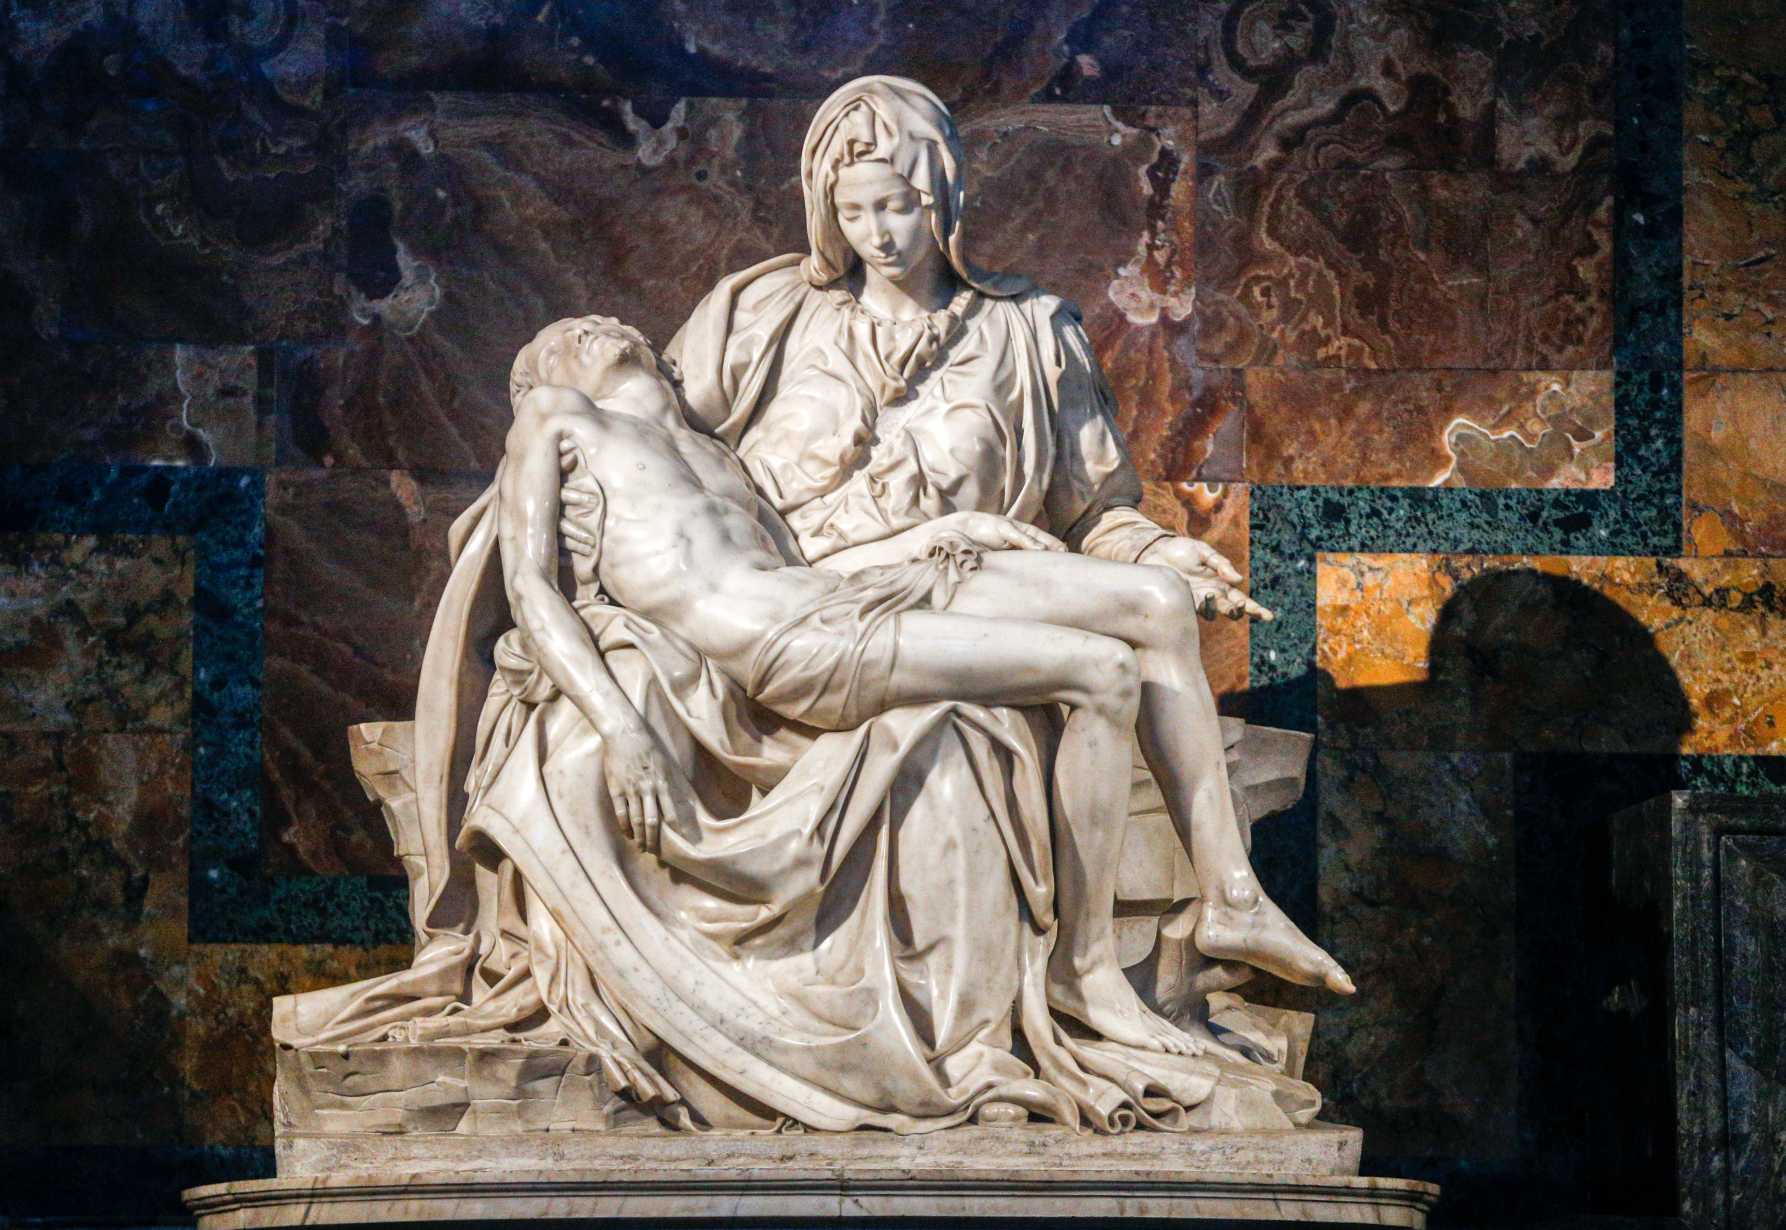 Michelangelo's Pieta' getting new high-security barrier before Jubilee Year